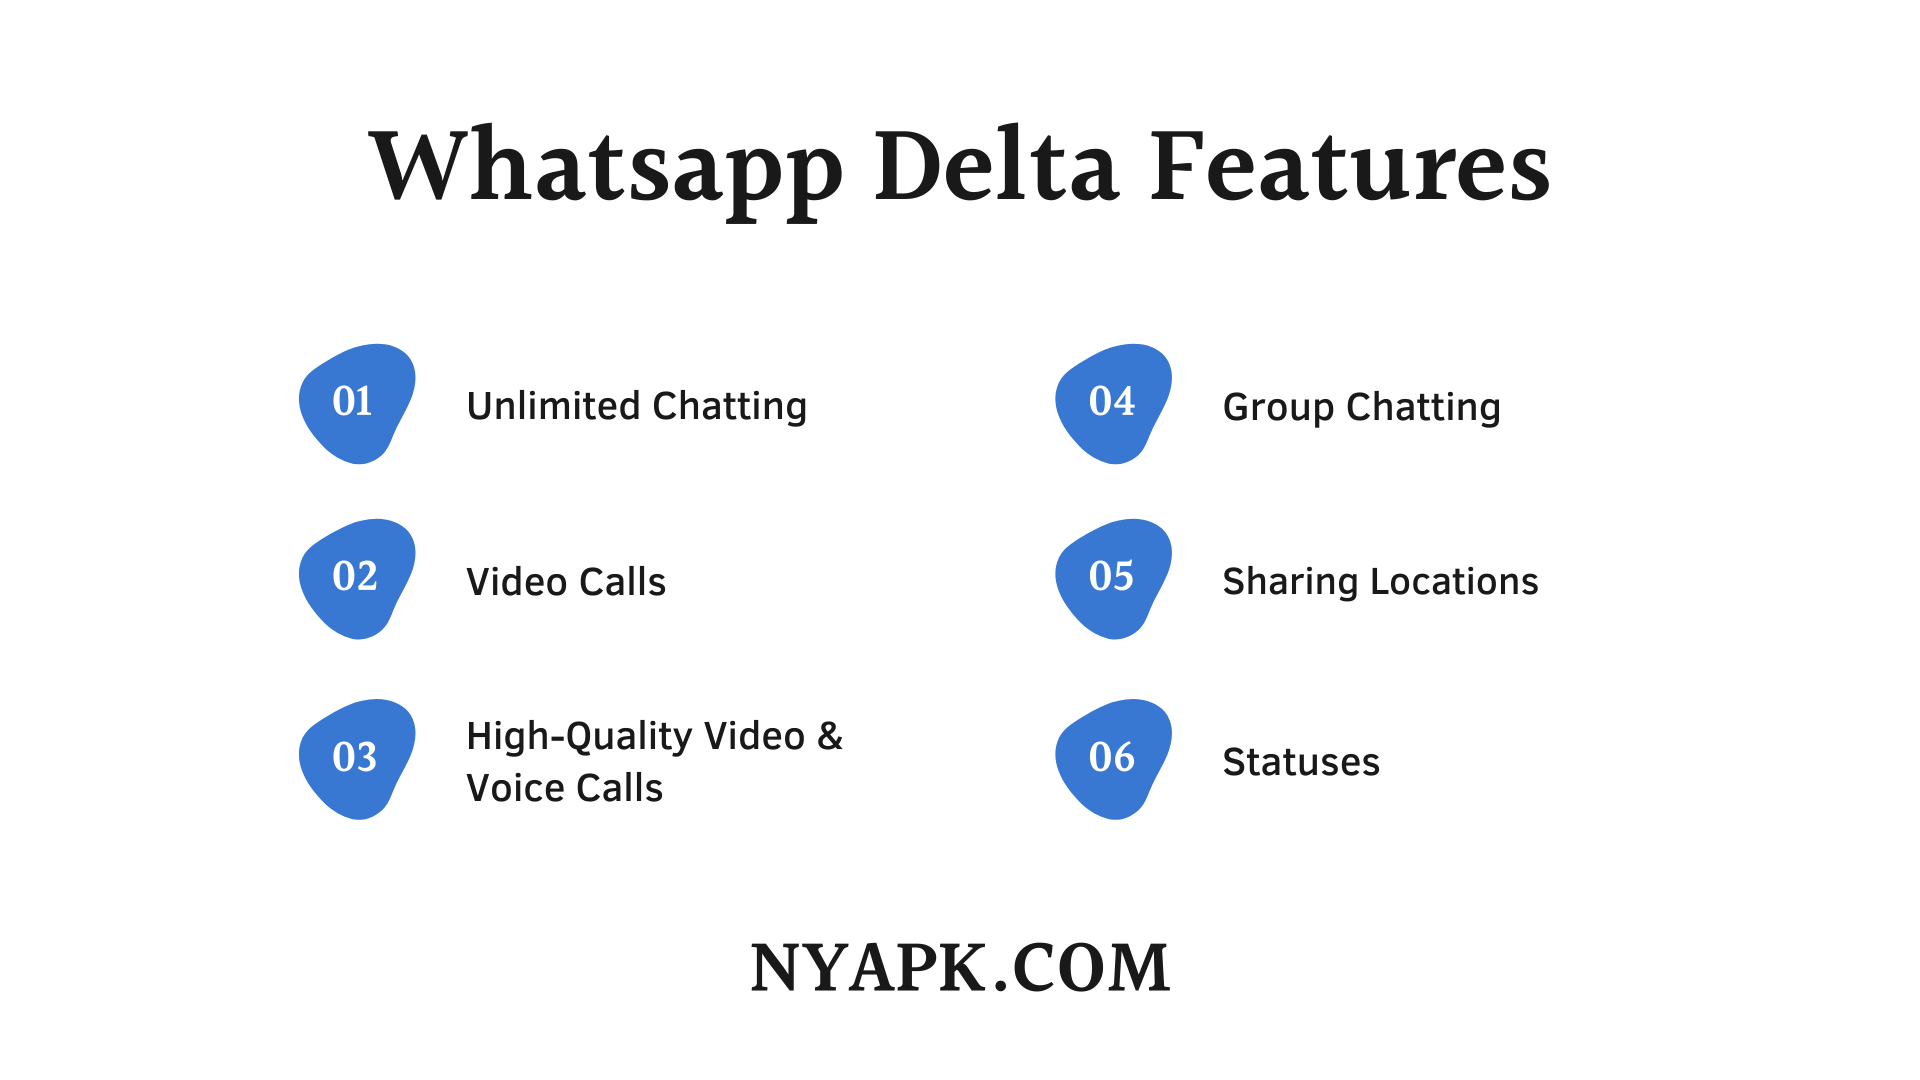 Whatsapp Delta Features